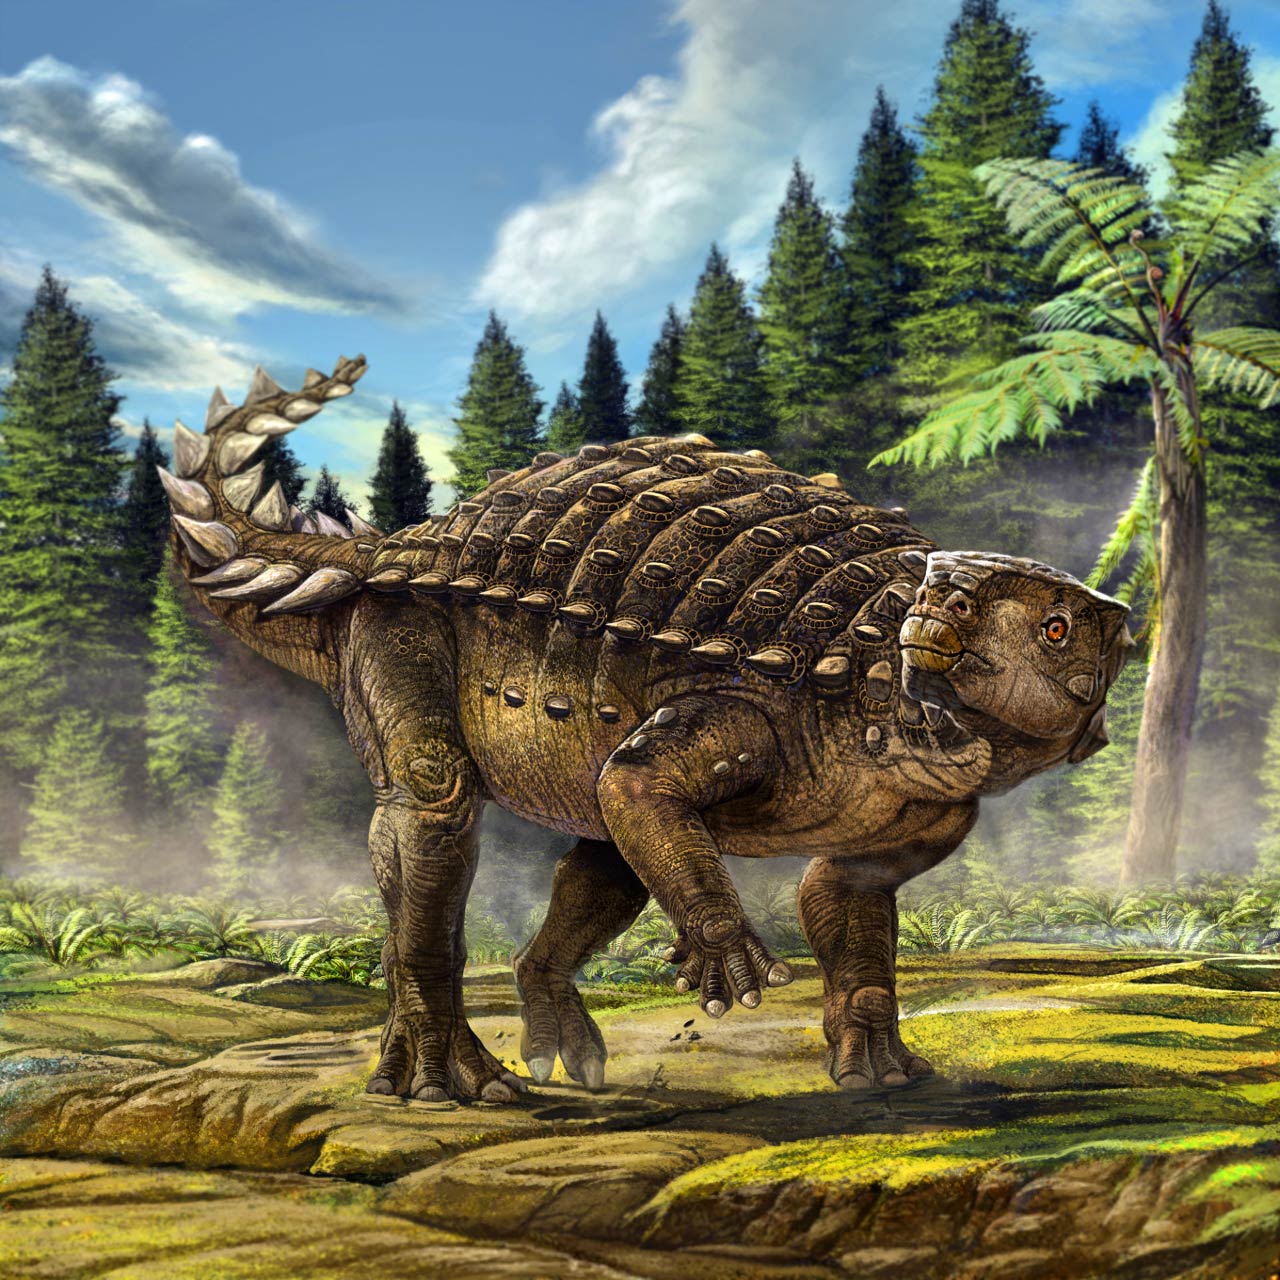 An artist impression of Kunbarrasaurus ieversi. Image credit: © Australian Geographic.